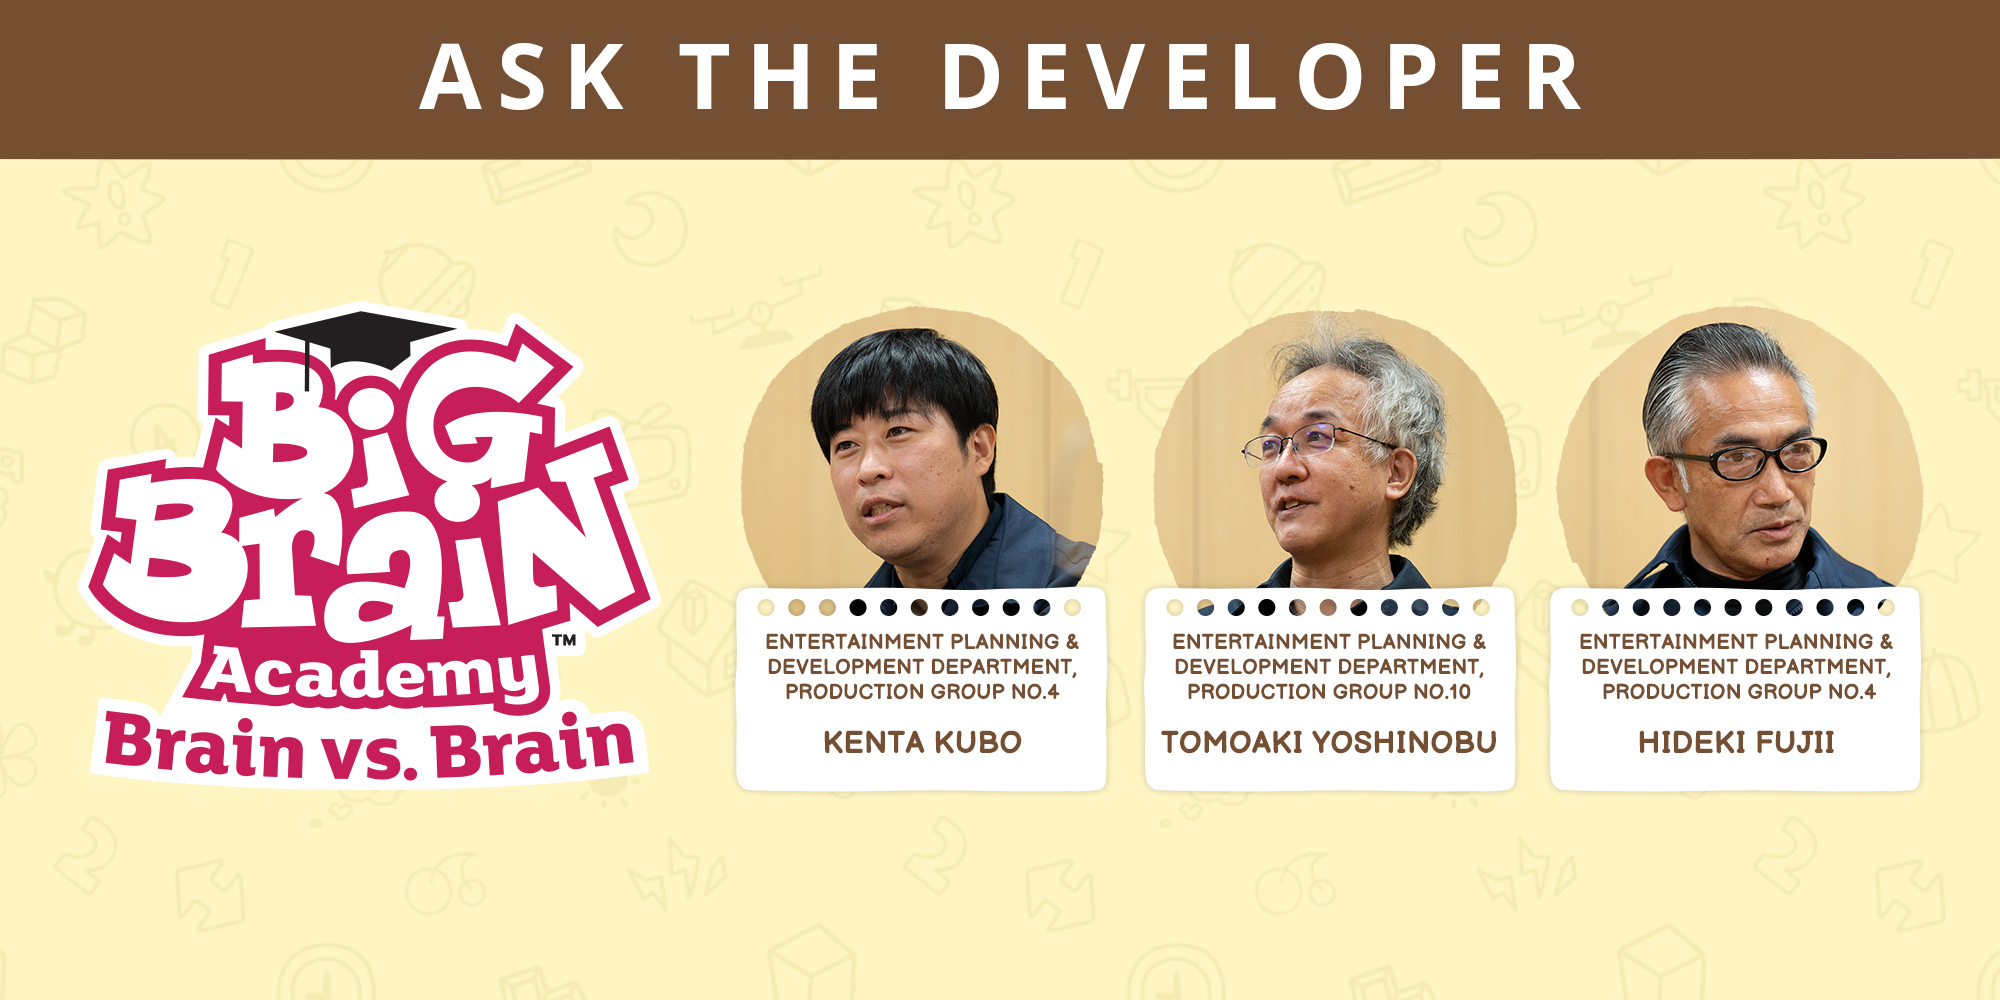 Ask the Developer Vol. 3, Big Brain Academy: Brain vs. Brain